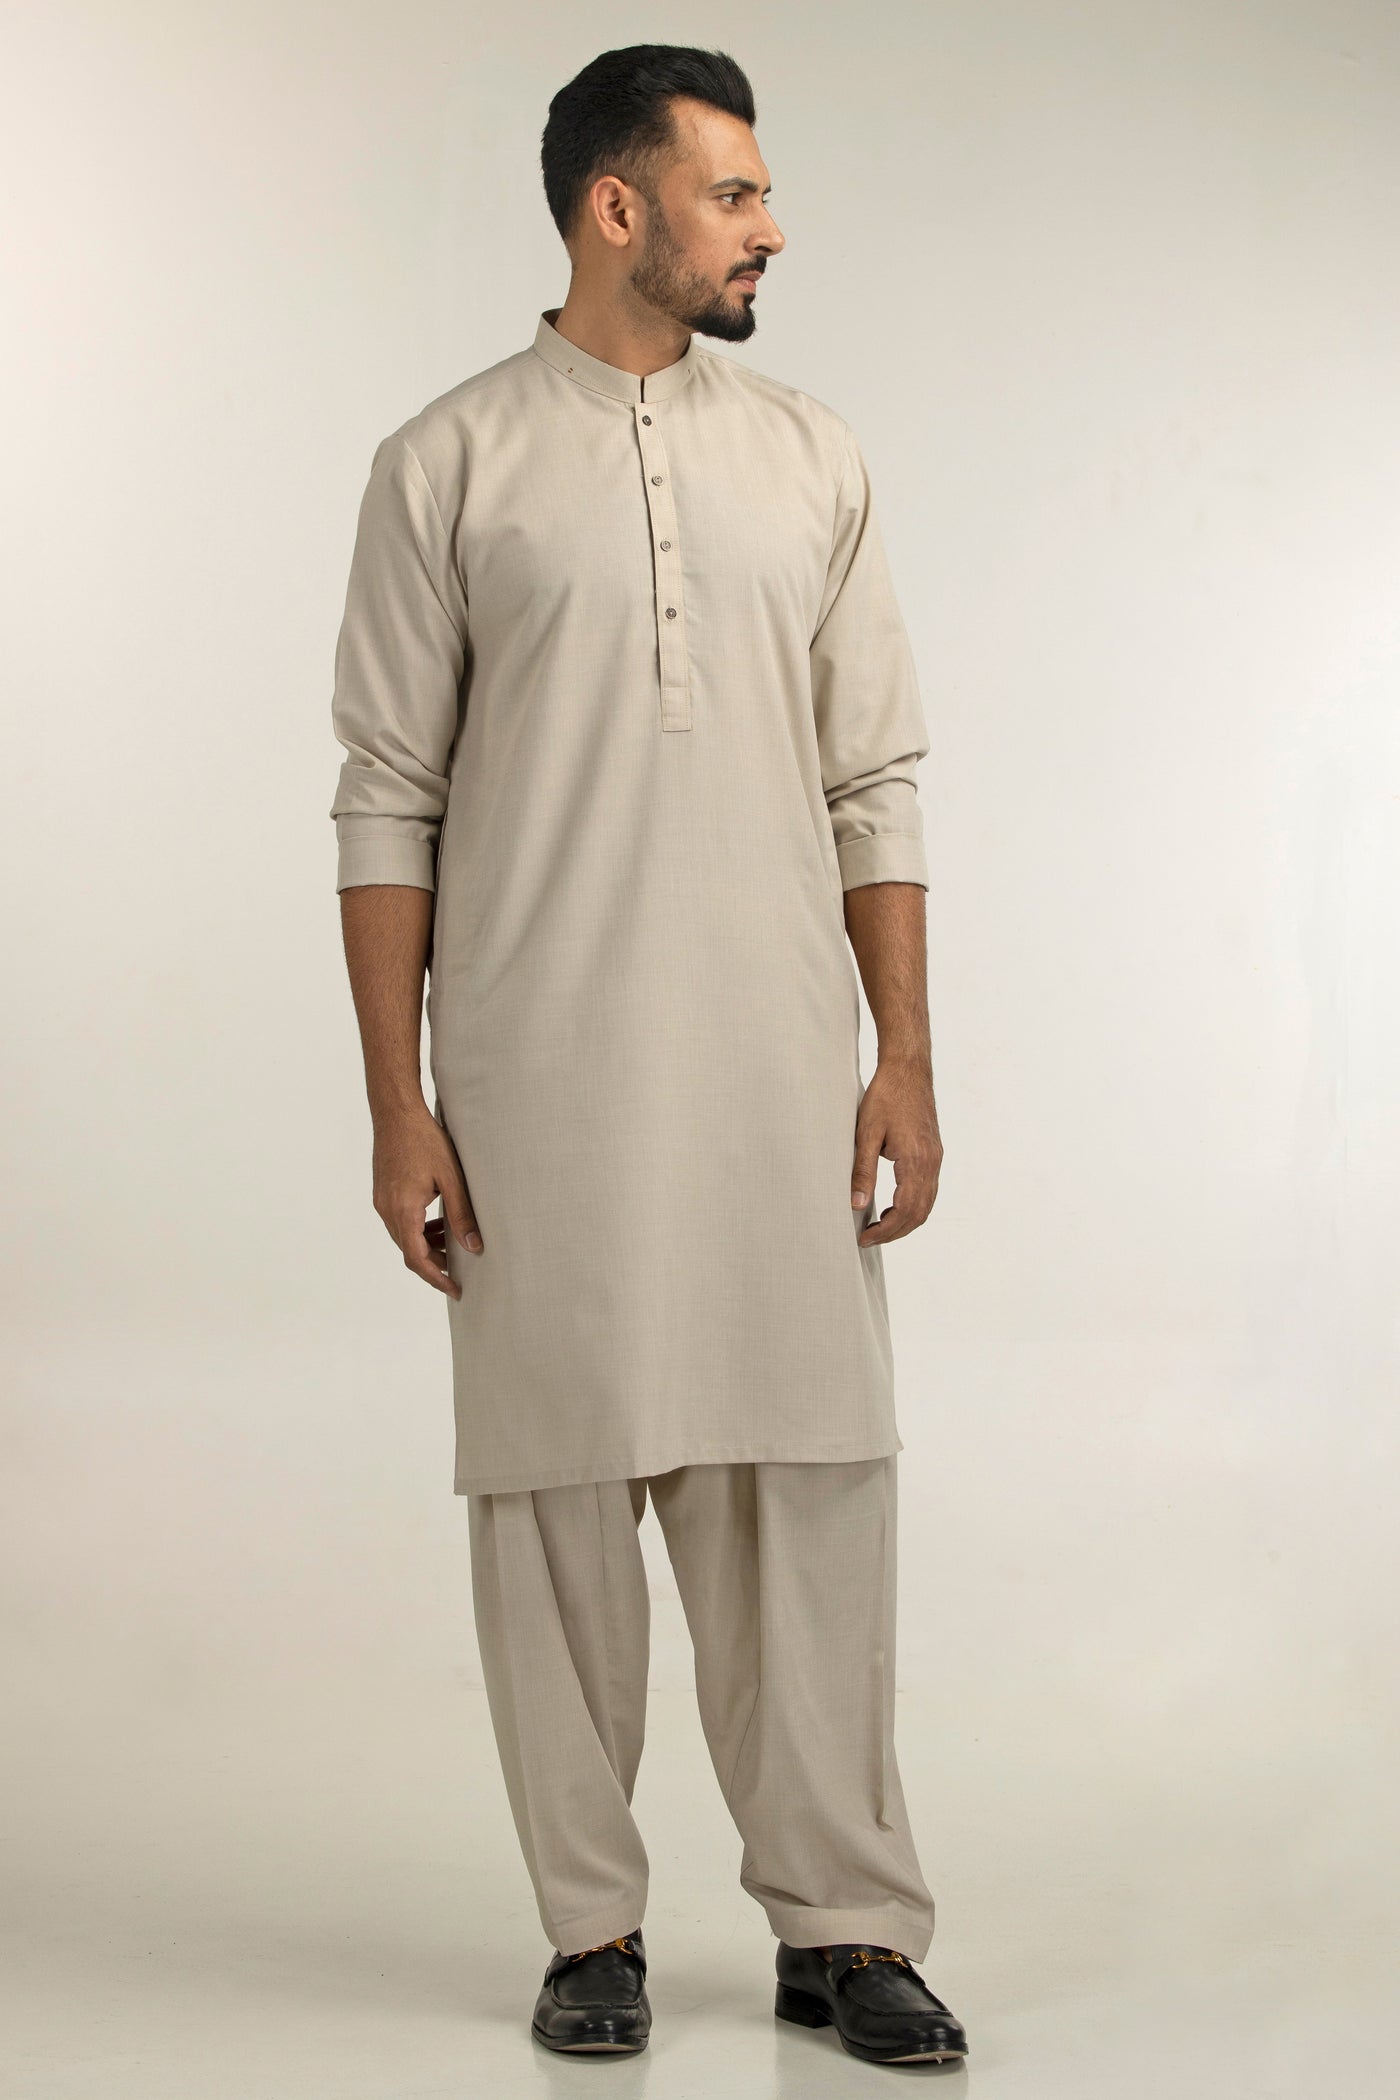 Gul Ahmed Ready to Wear Mens Suit - JN-18 C